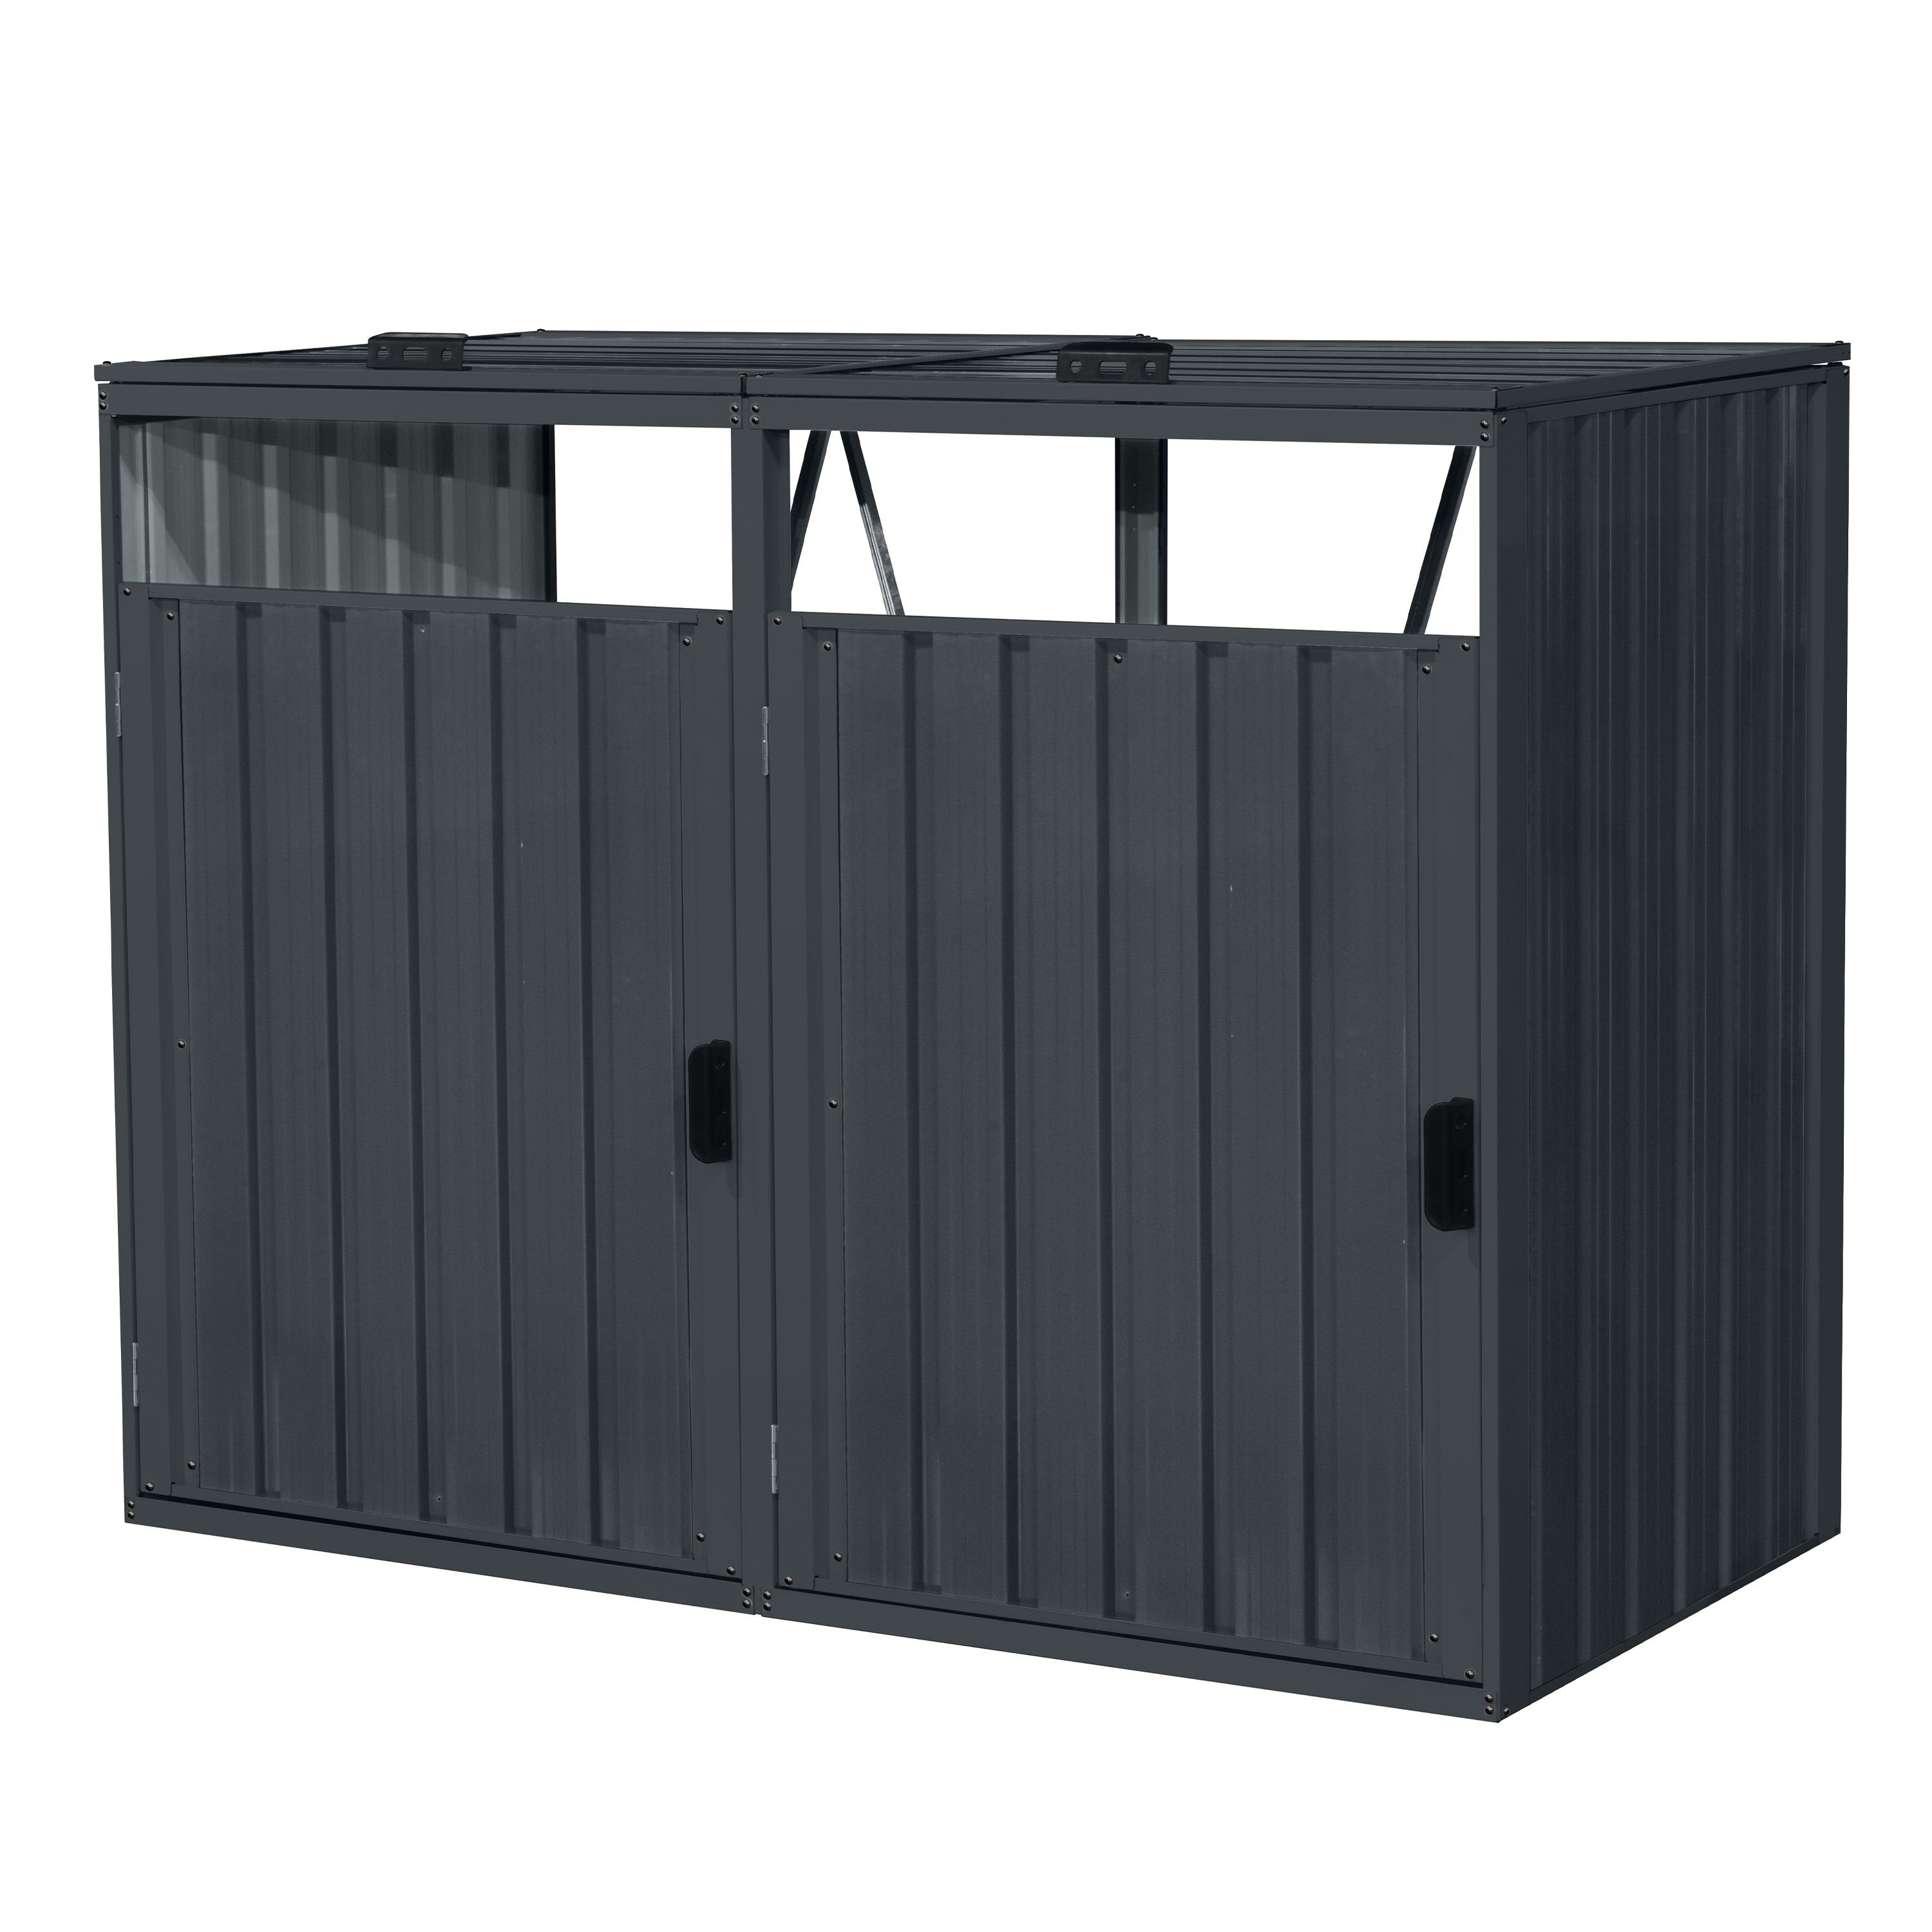 AXI Owen metalen Containerombouw Antraciet - 2 containers